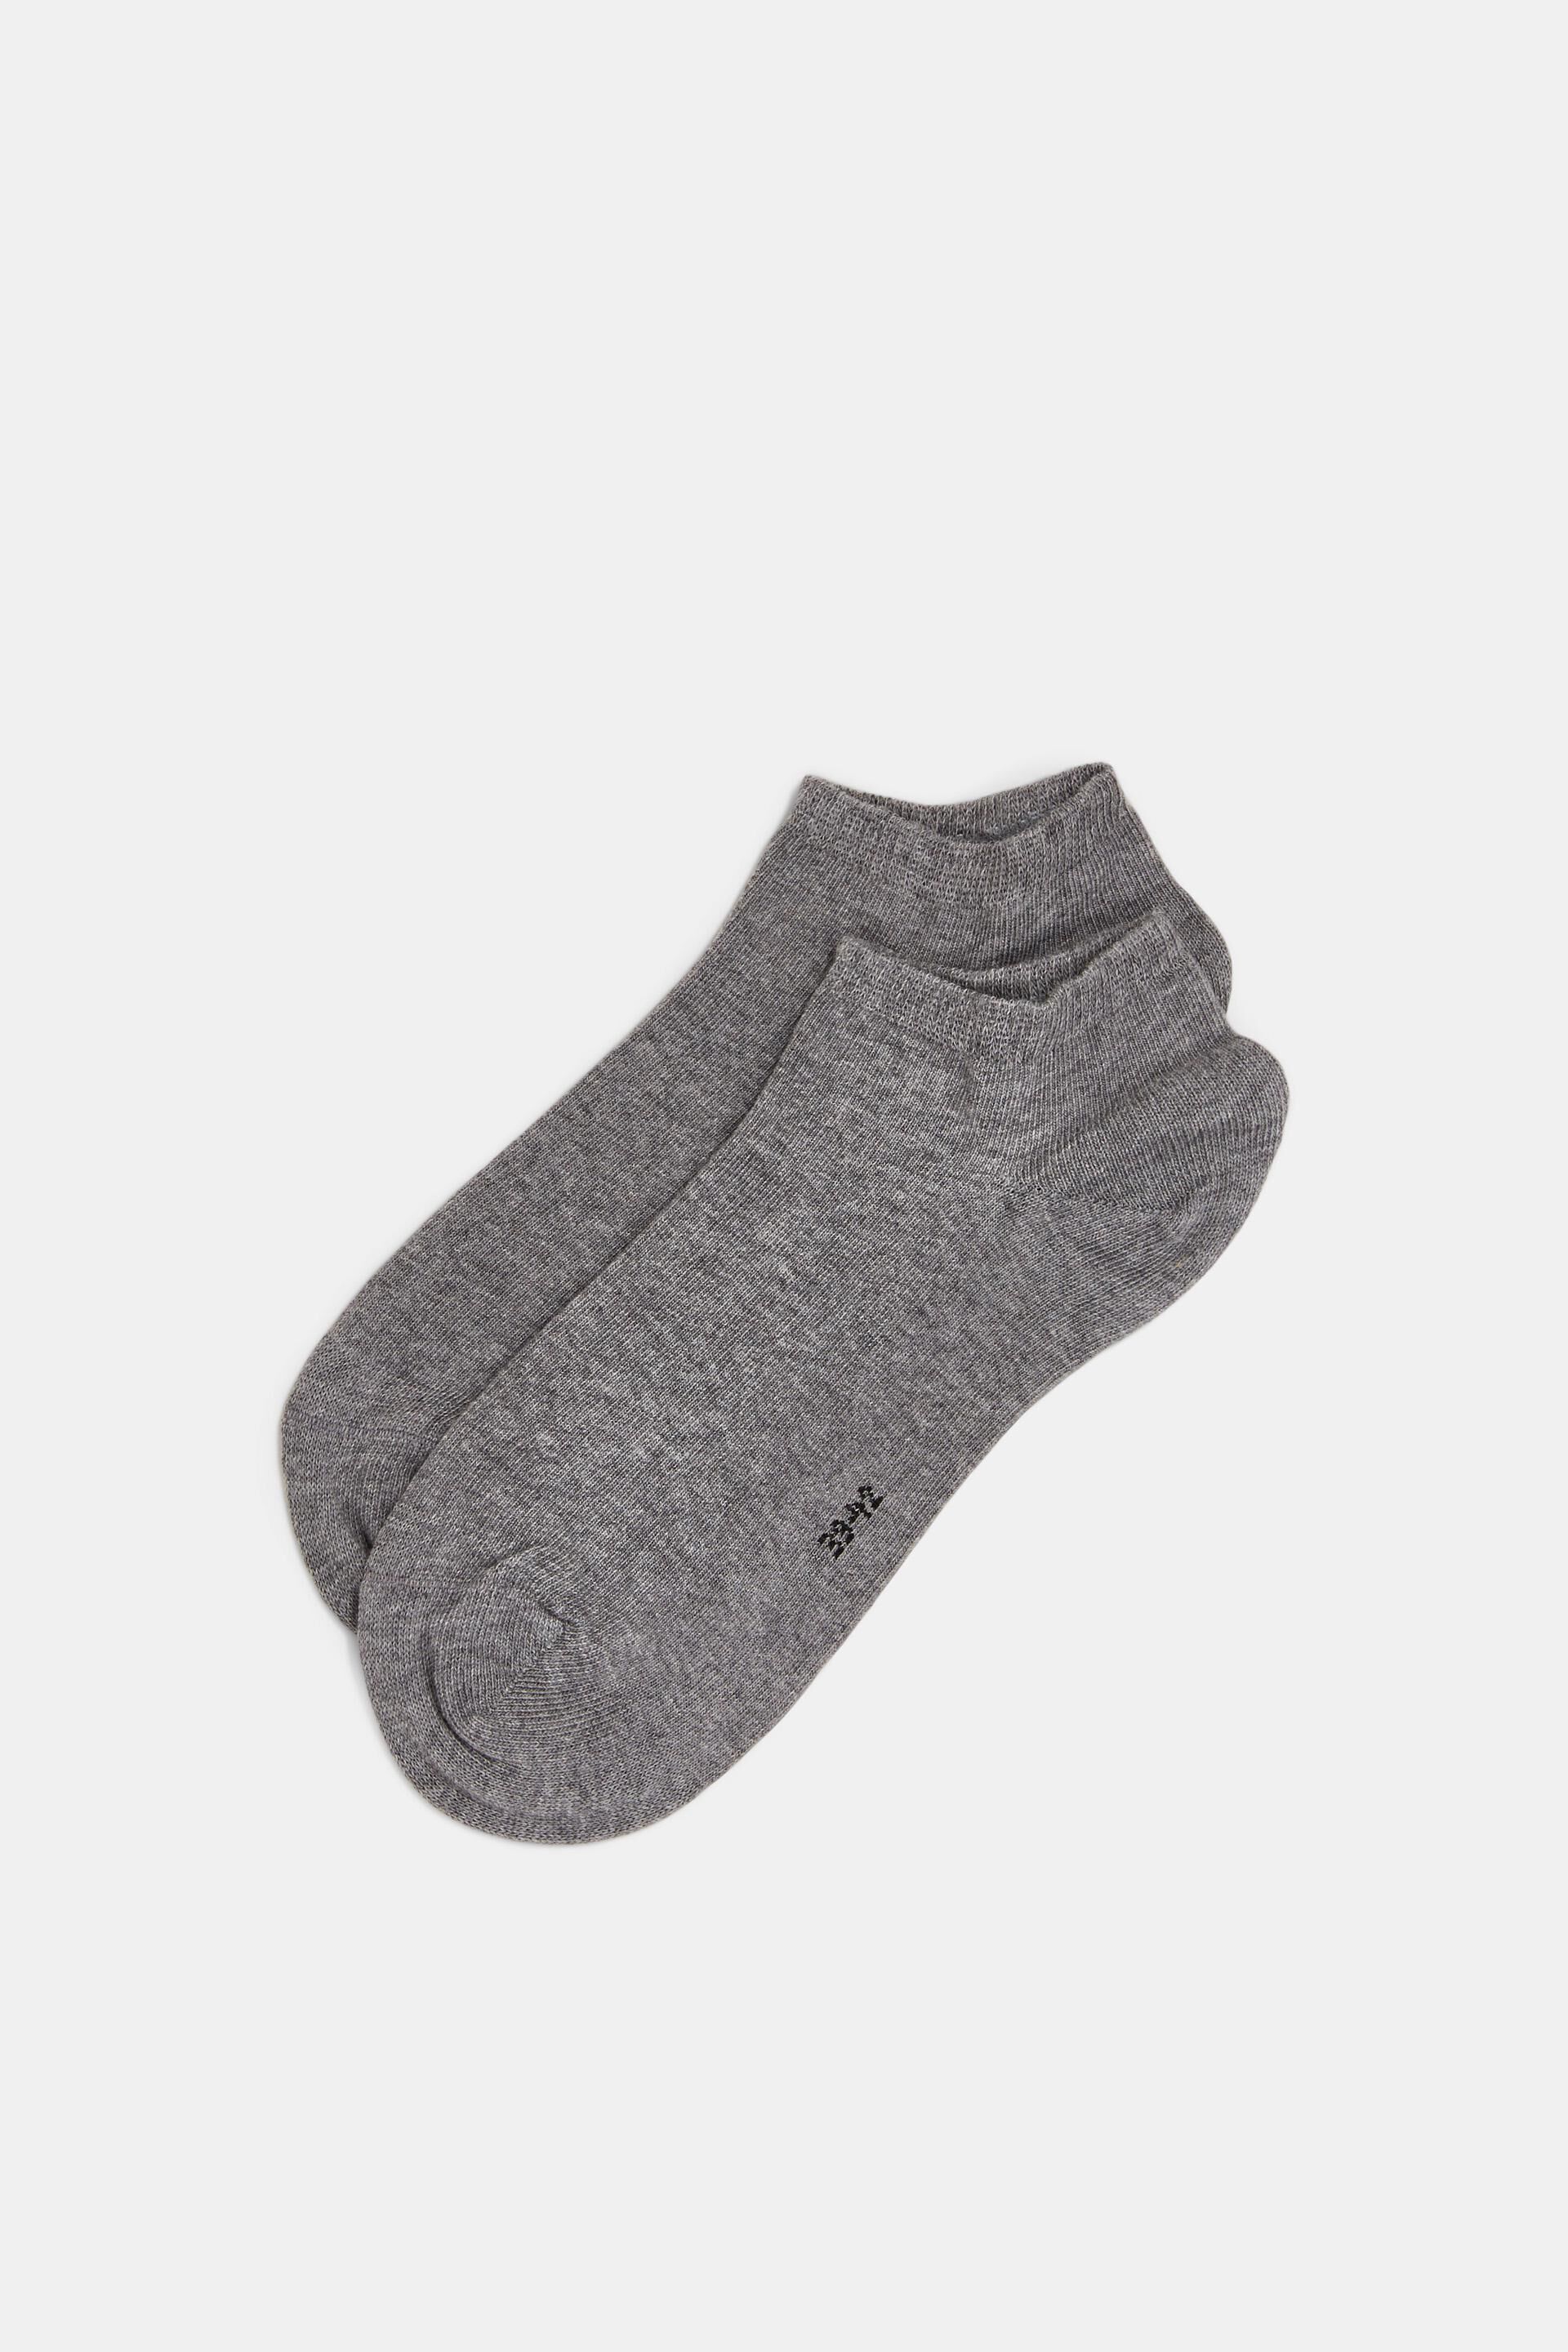 Esprit Online Store 2-pack of trainer socks, organic cotton